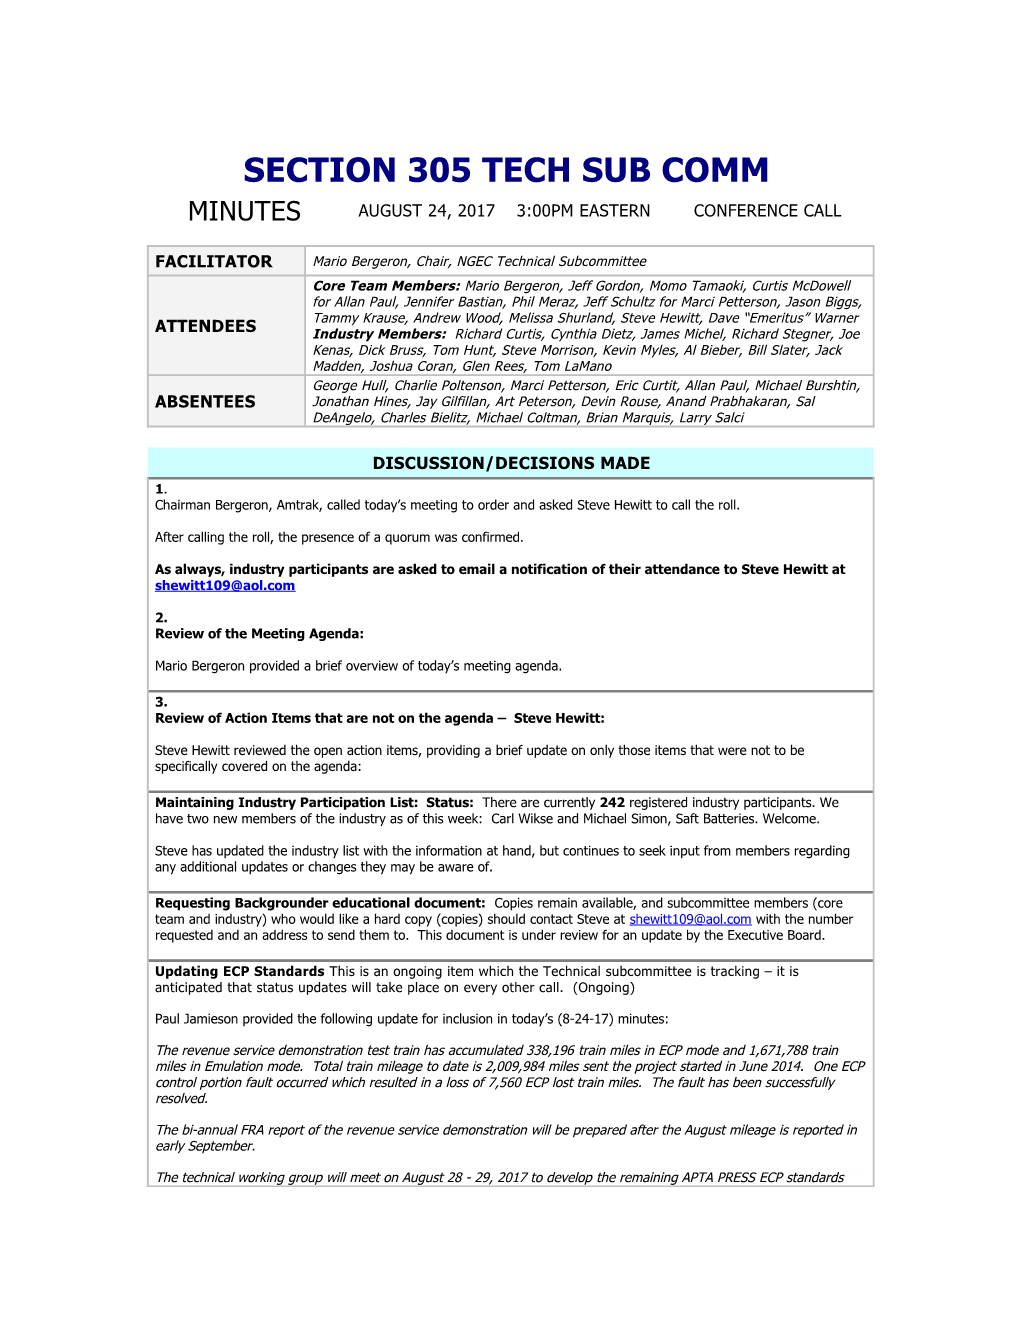 Section 305 Tech Sub Comm s10